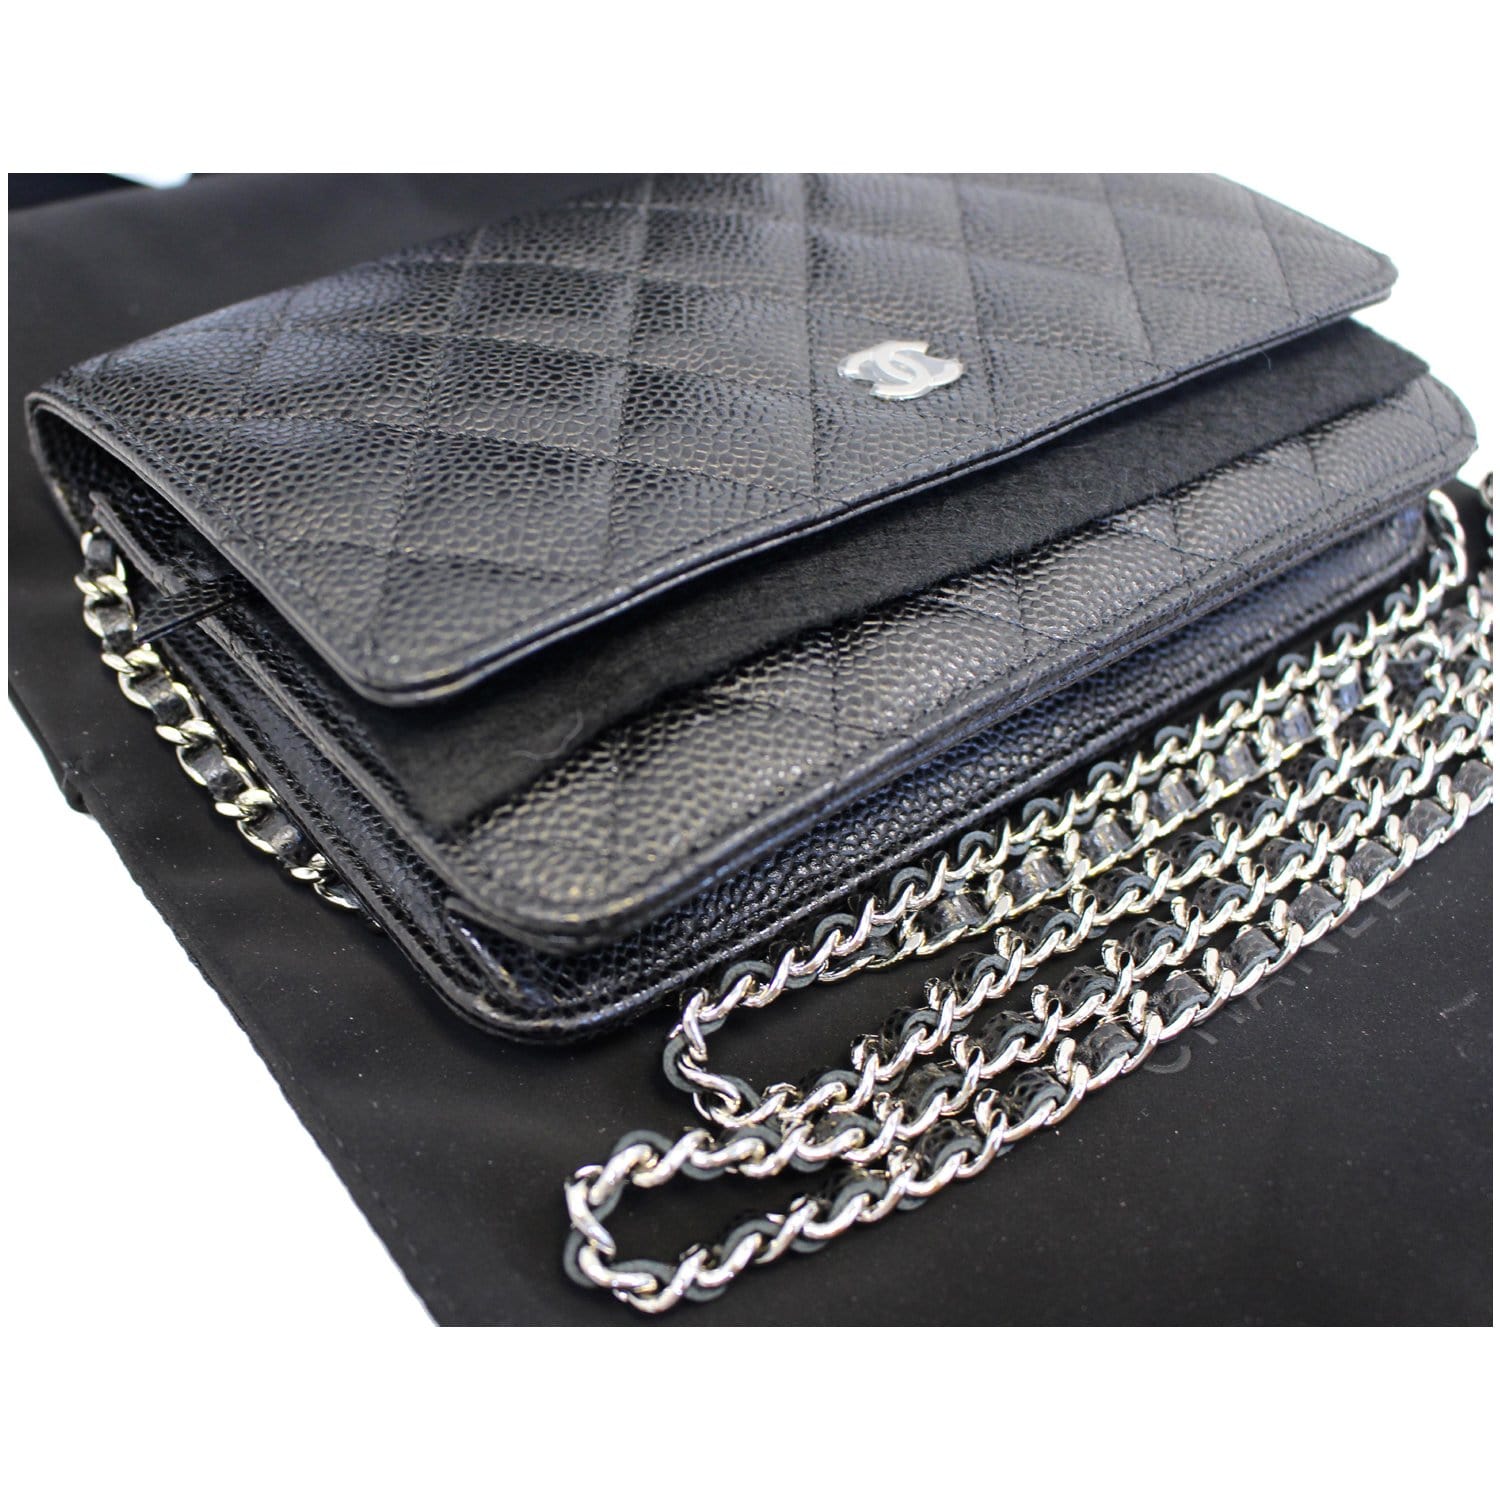 Chanel Classic Wallet On Chain - Black Crossbody Bags, Handbags - CHA969345